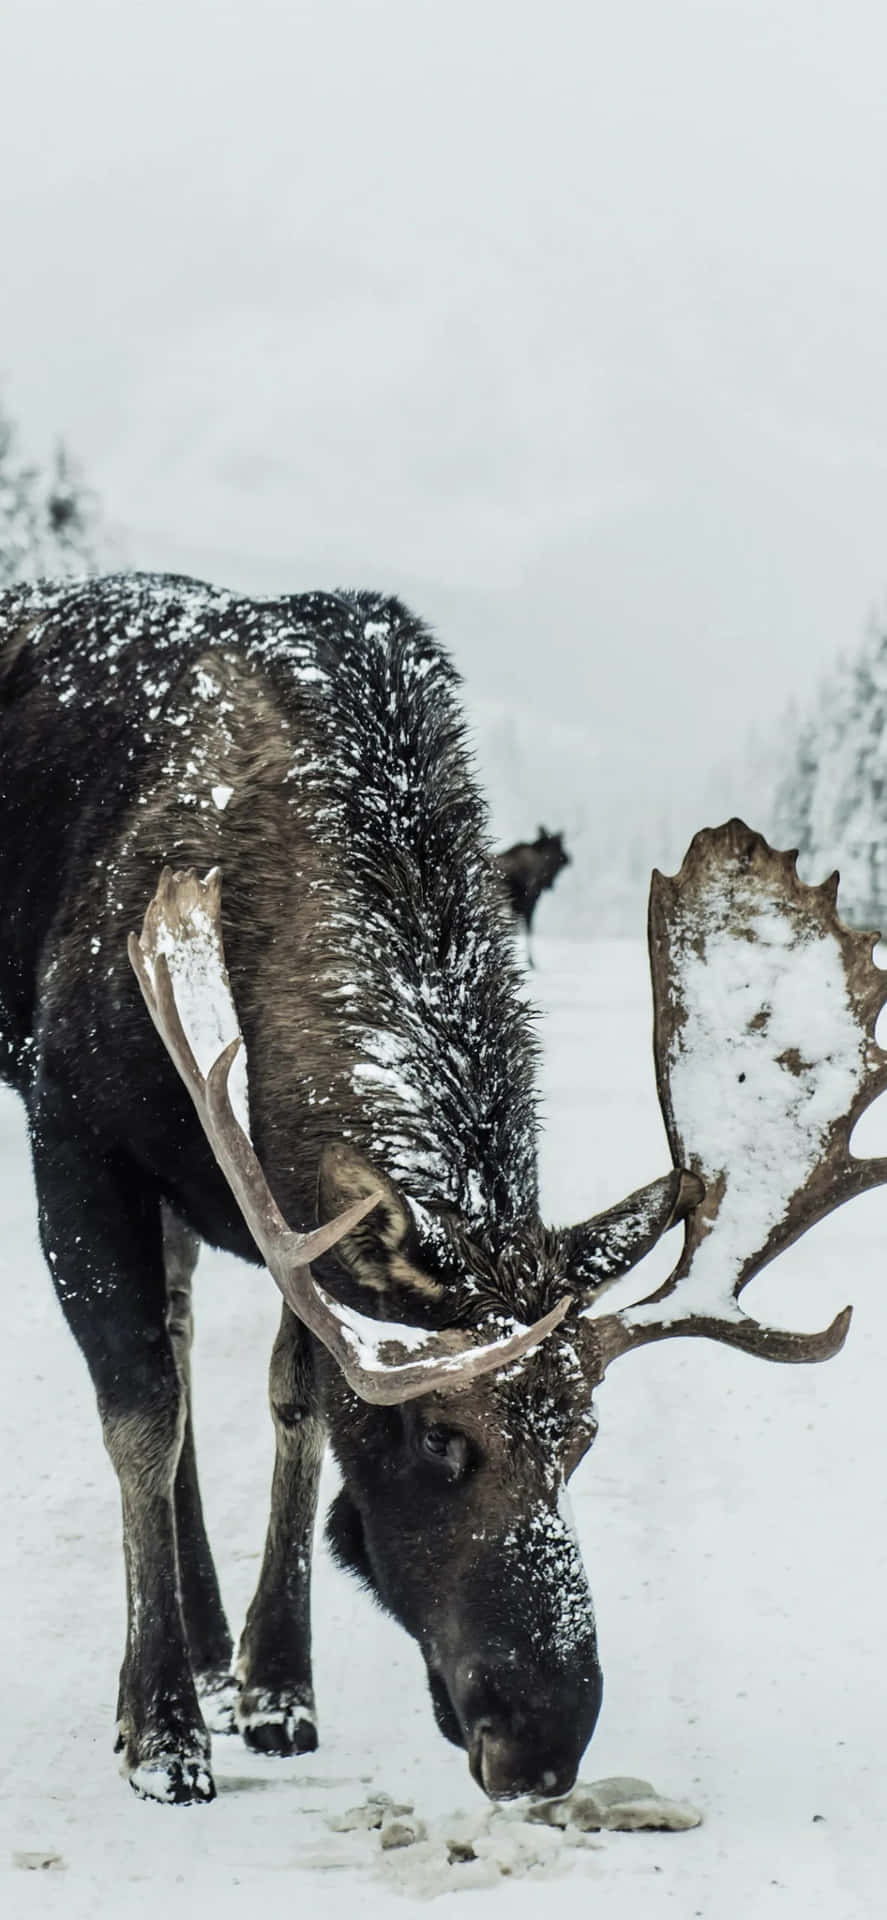 Majestic Reindeer Grazing in a Winter Landscape